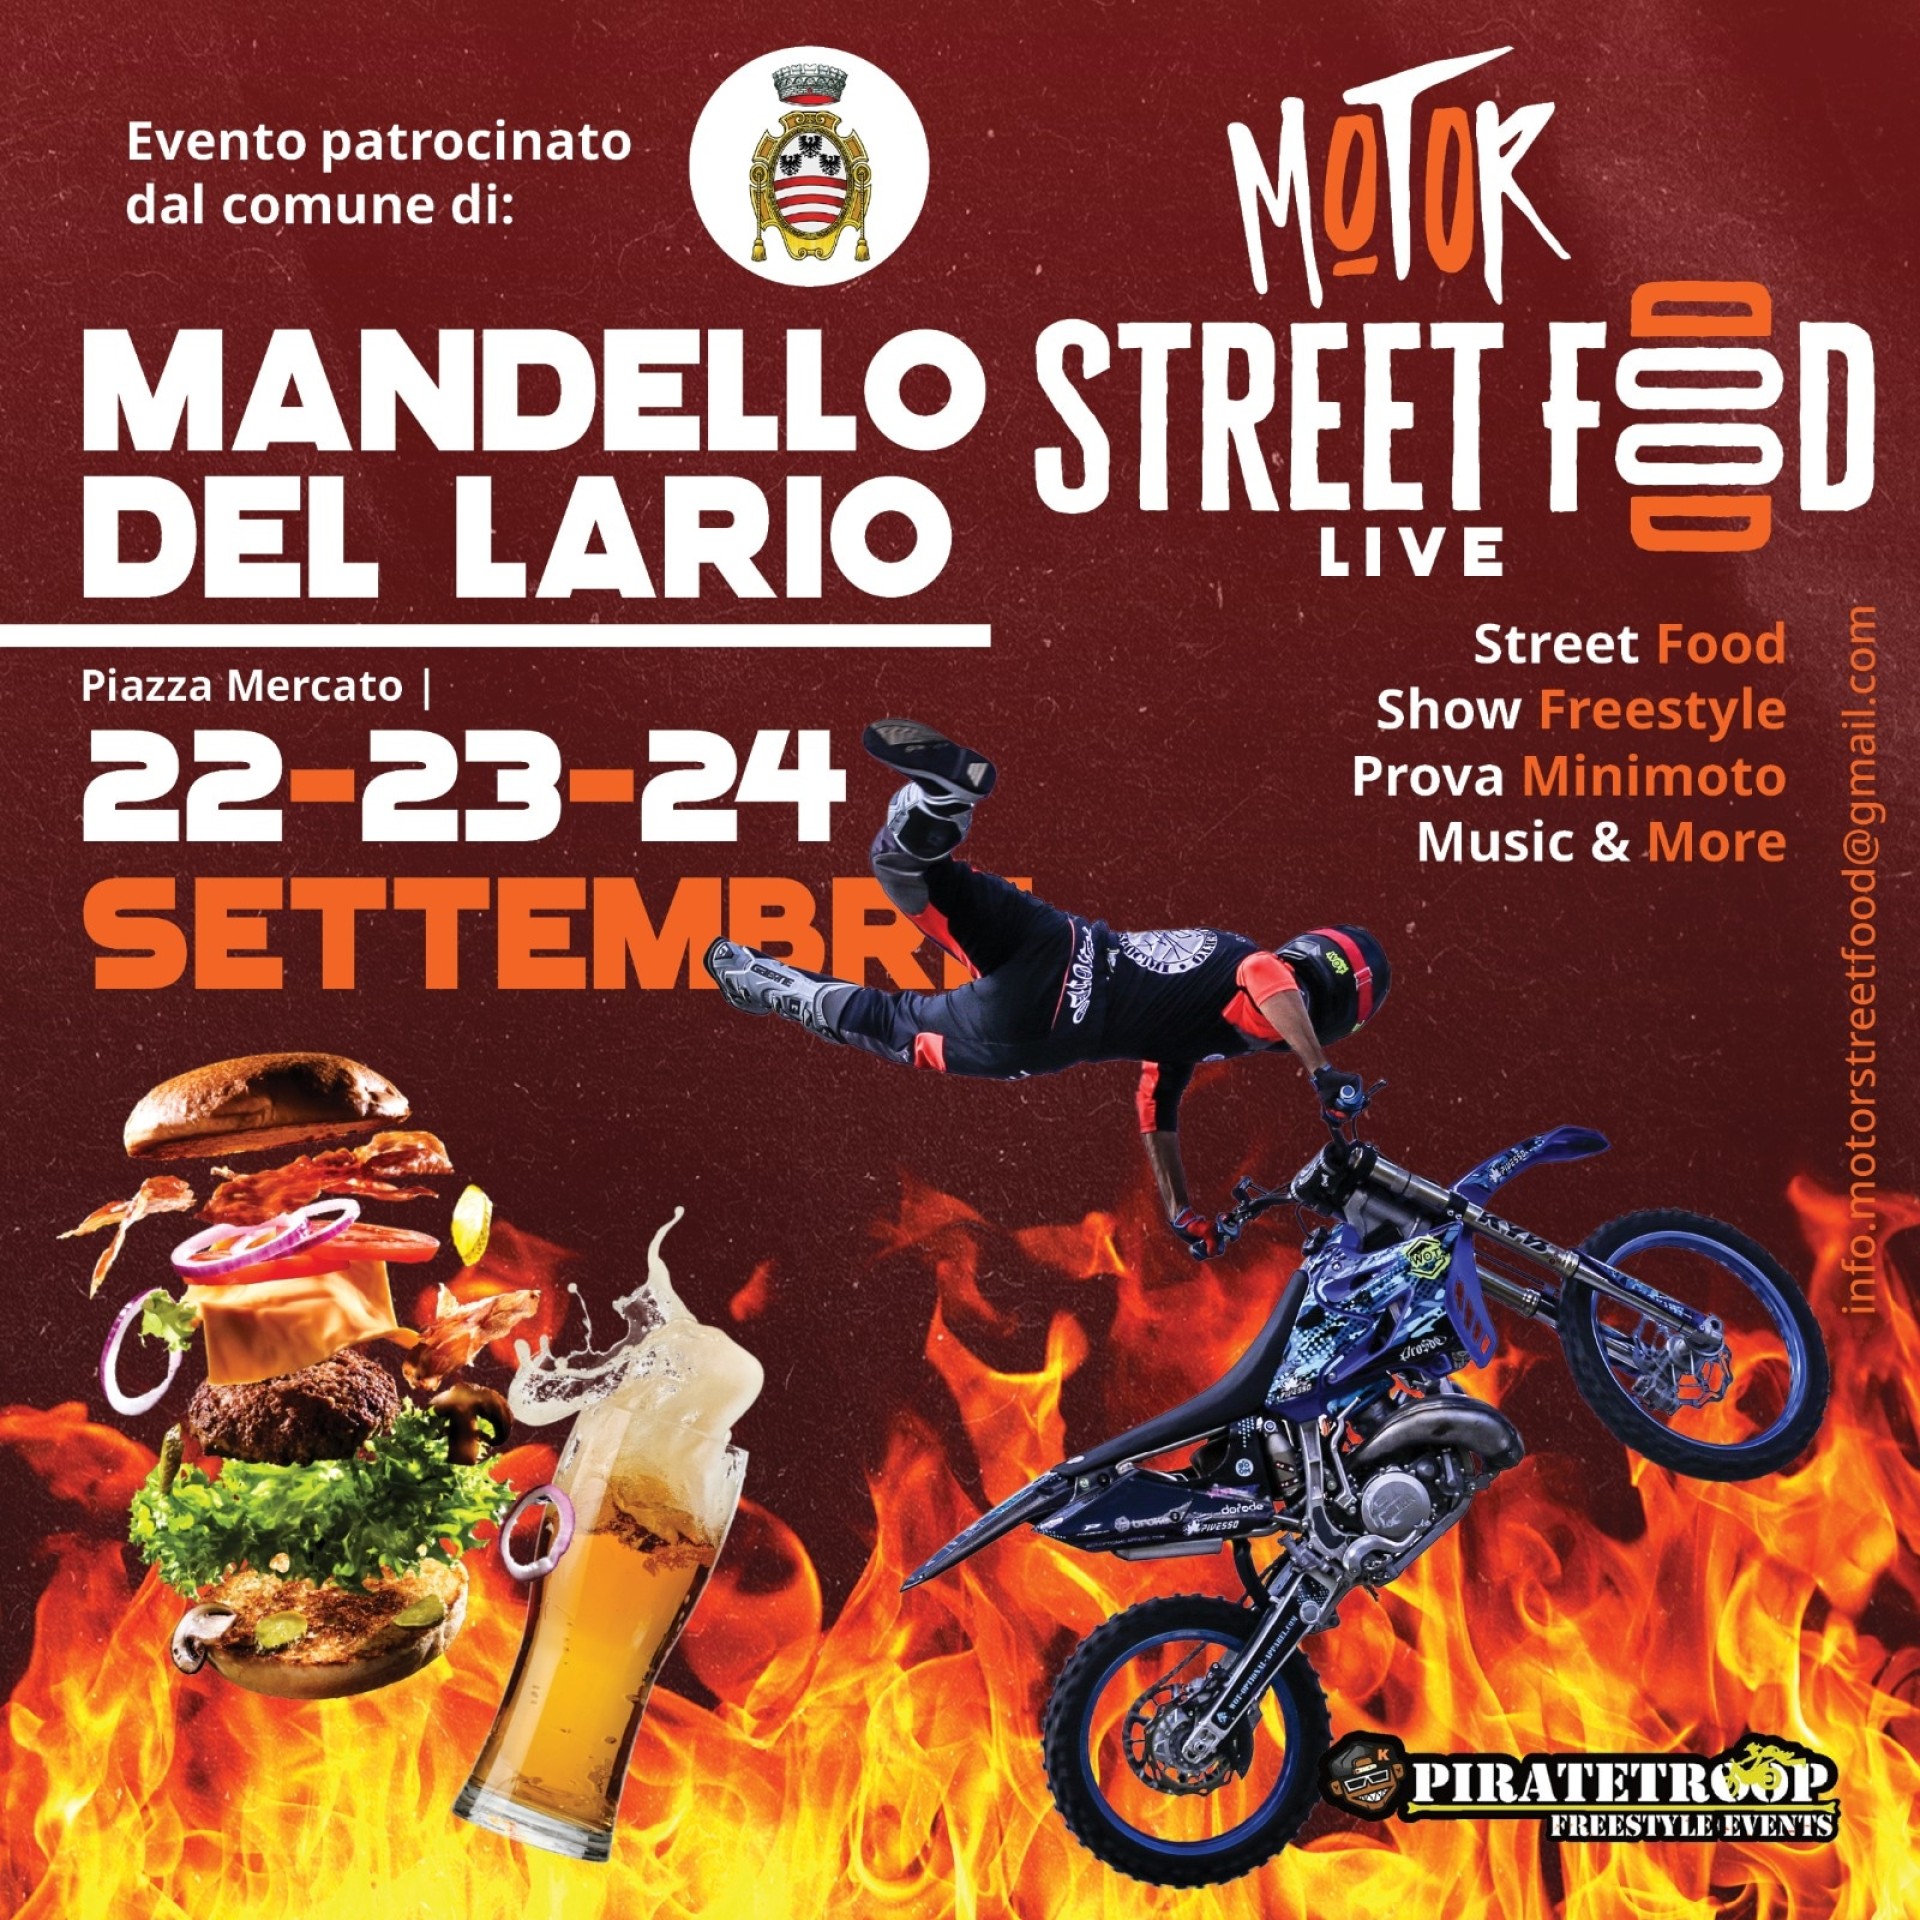 MOTOR STREET FOOD - MANDELLO DEL LARIO 2023